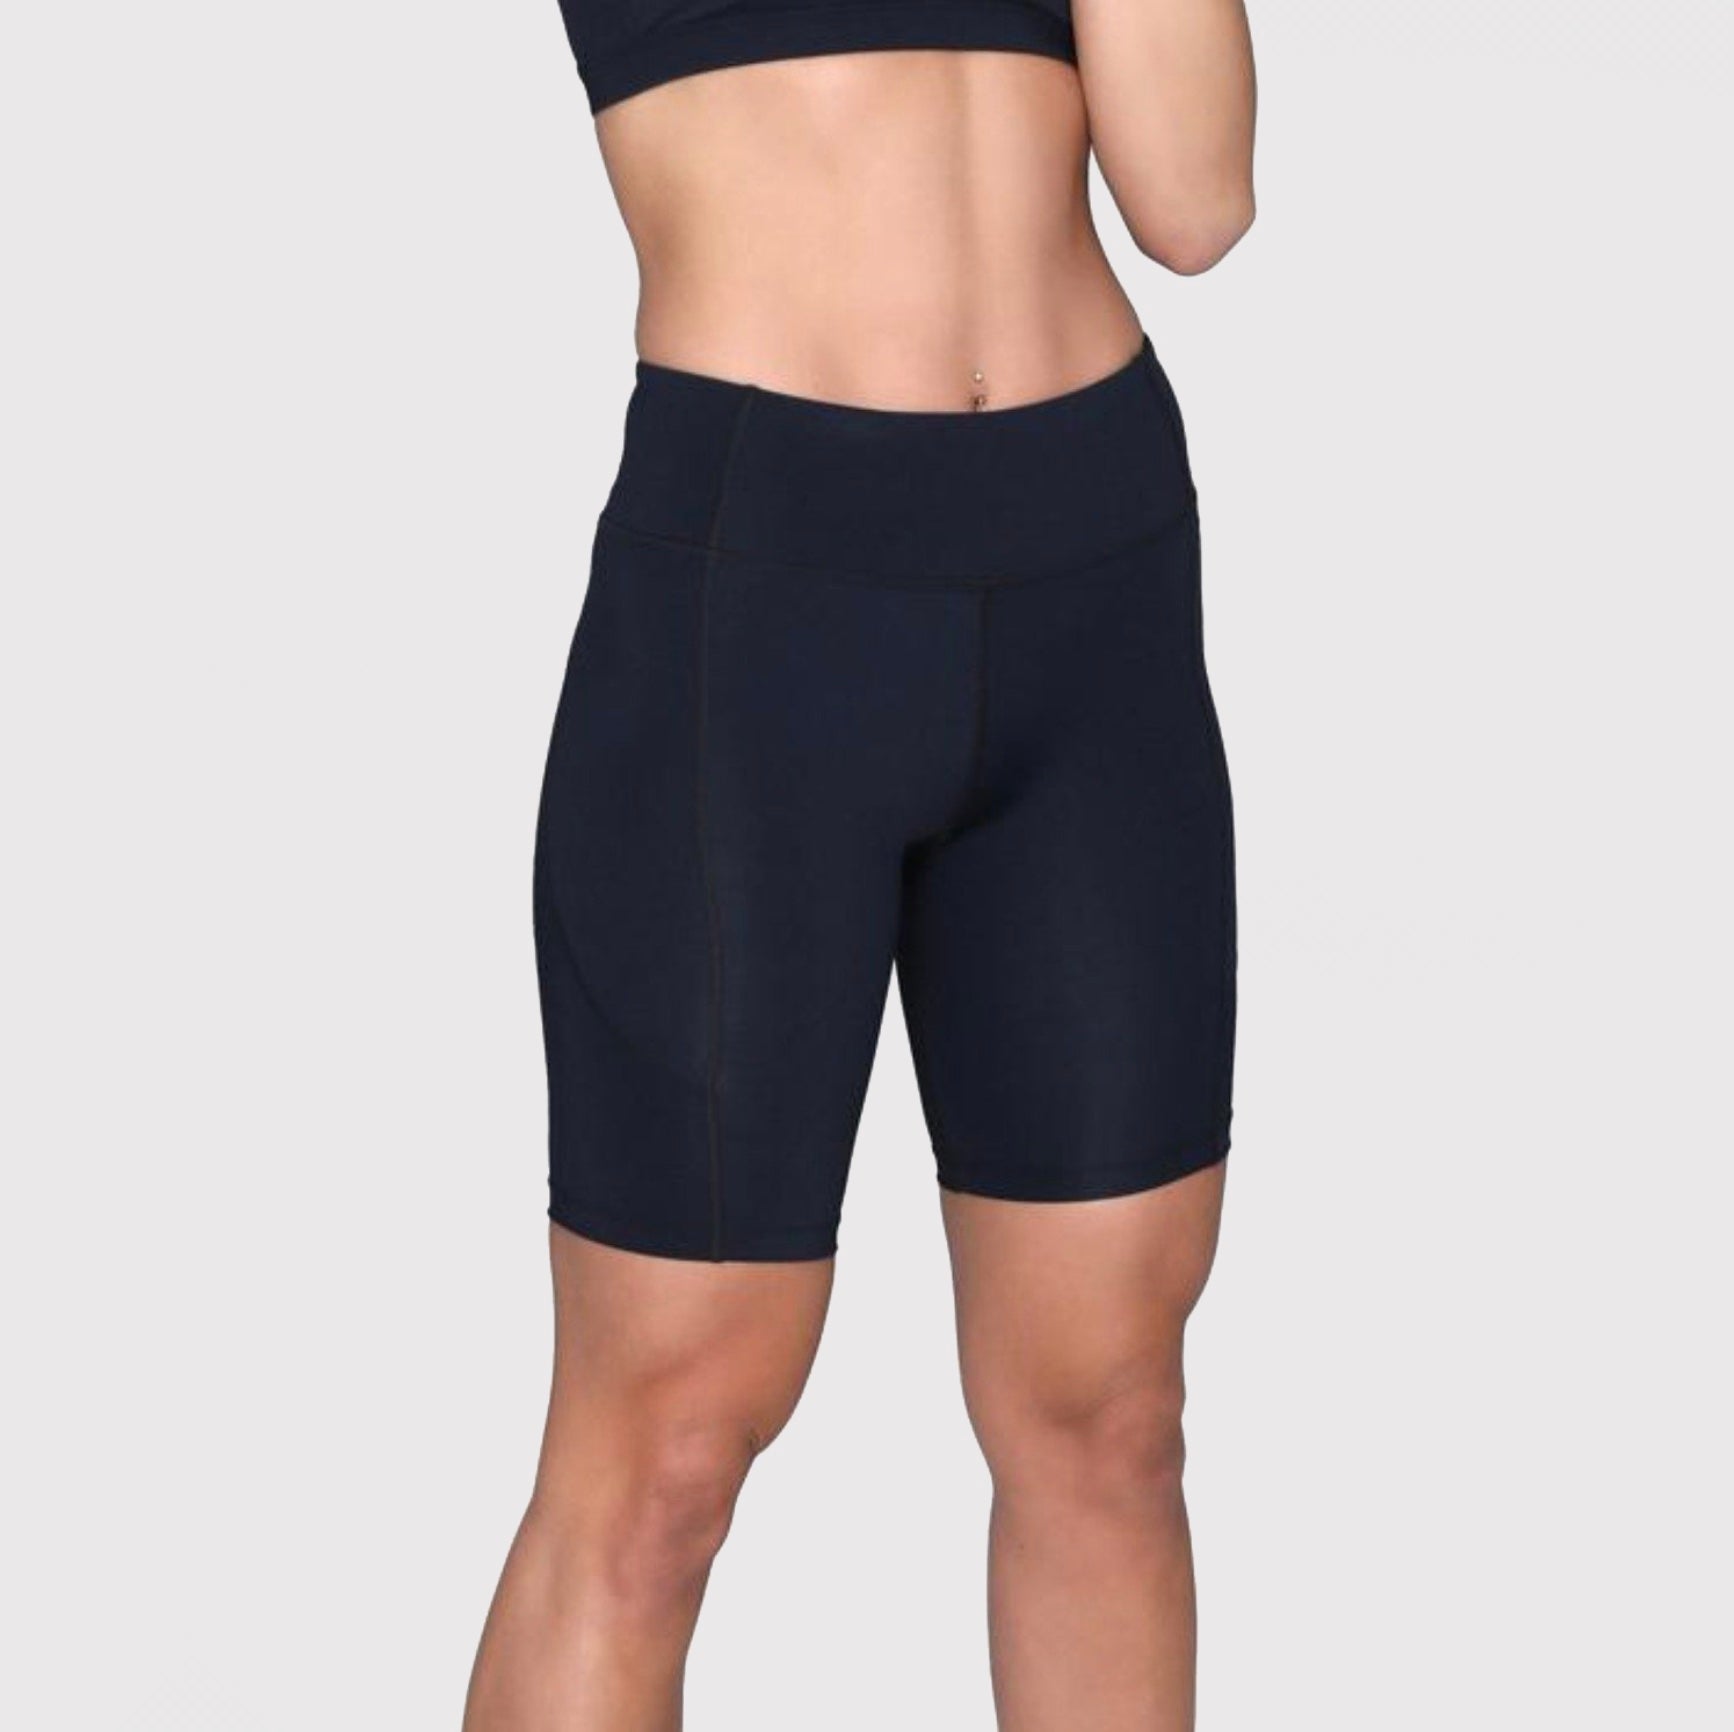 Women's Active & Compression Shorts